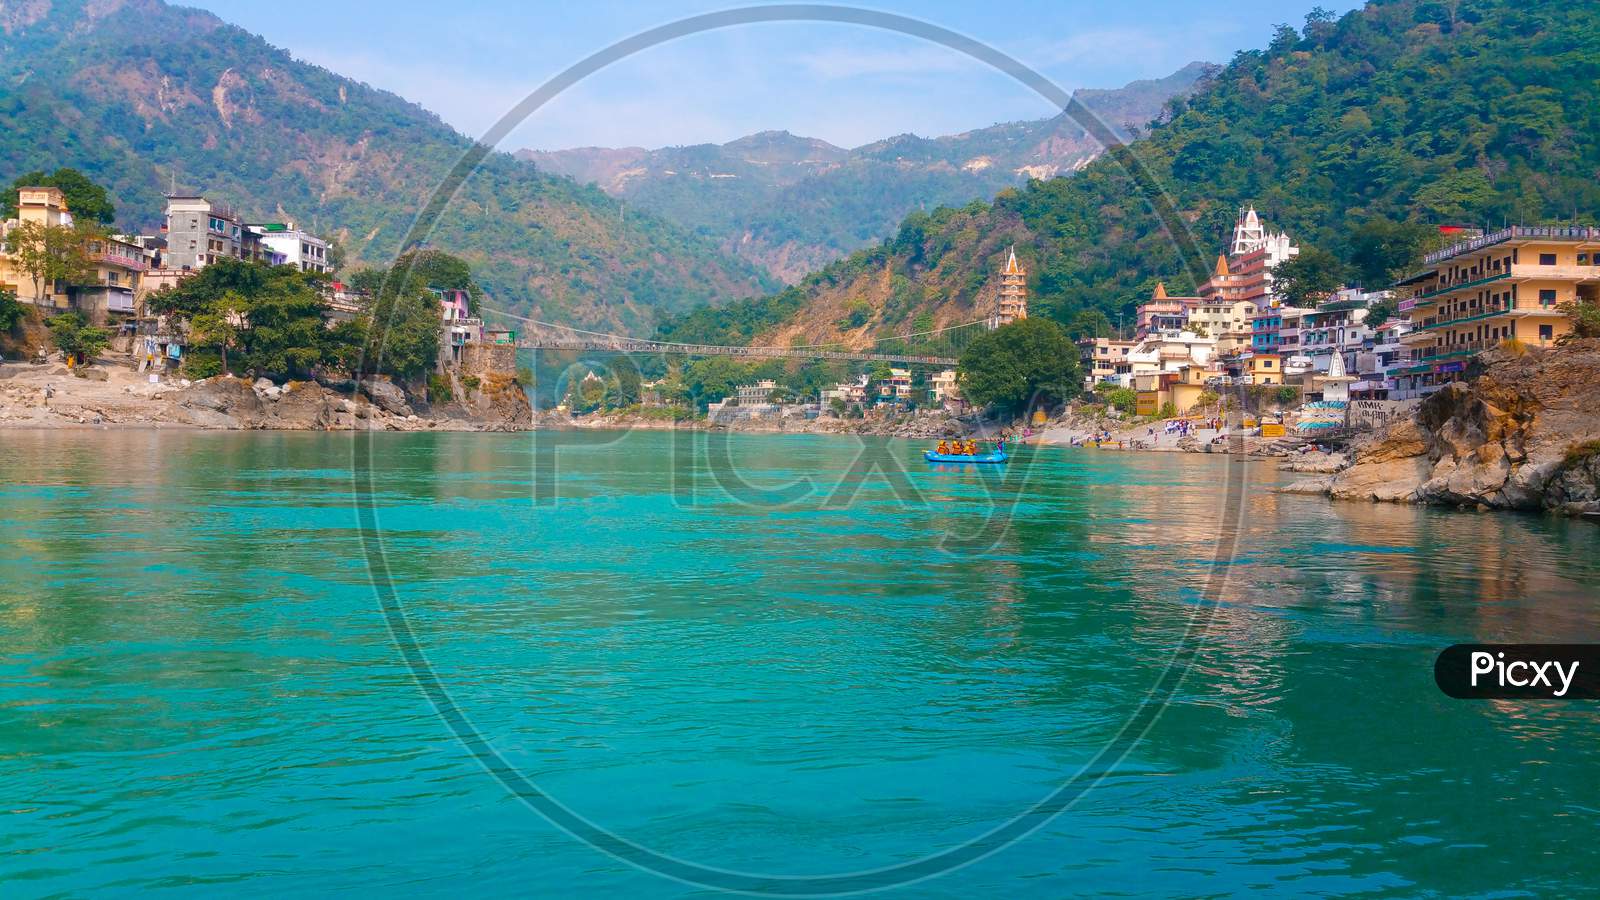 Scenic Ganga river flows through Rishikesh town